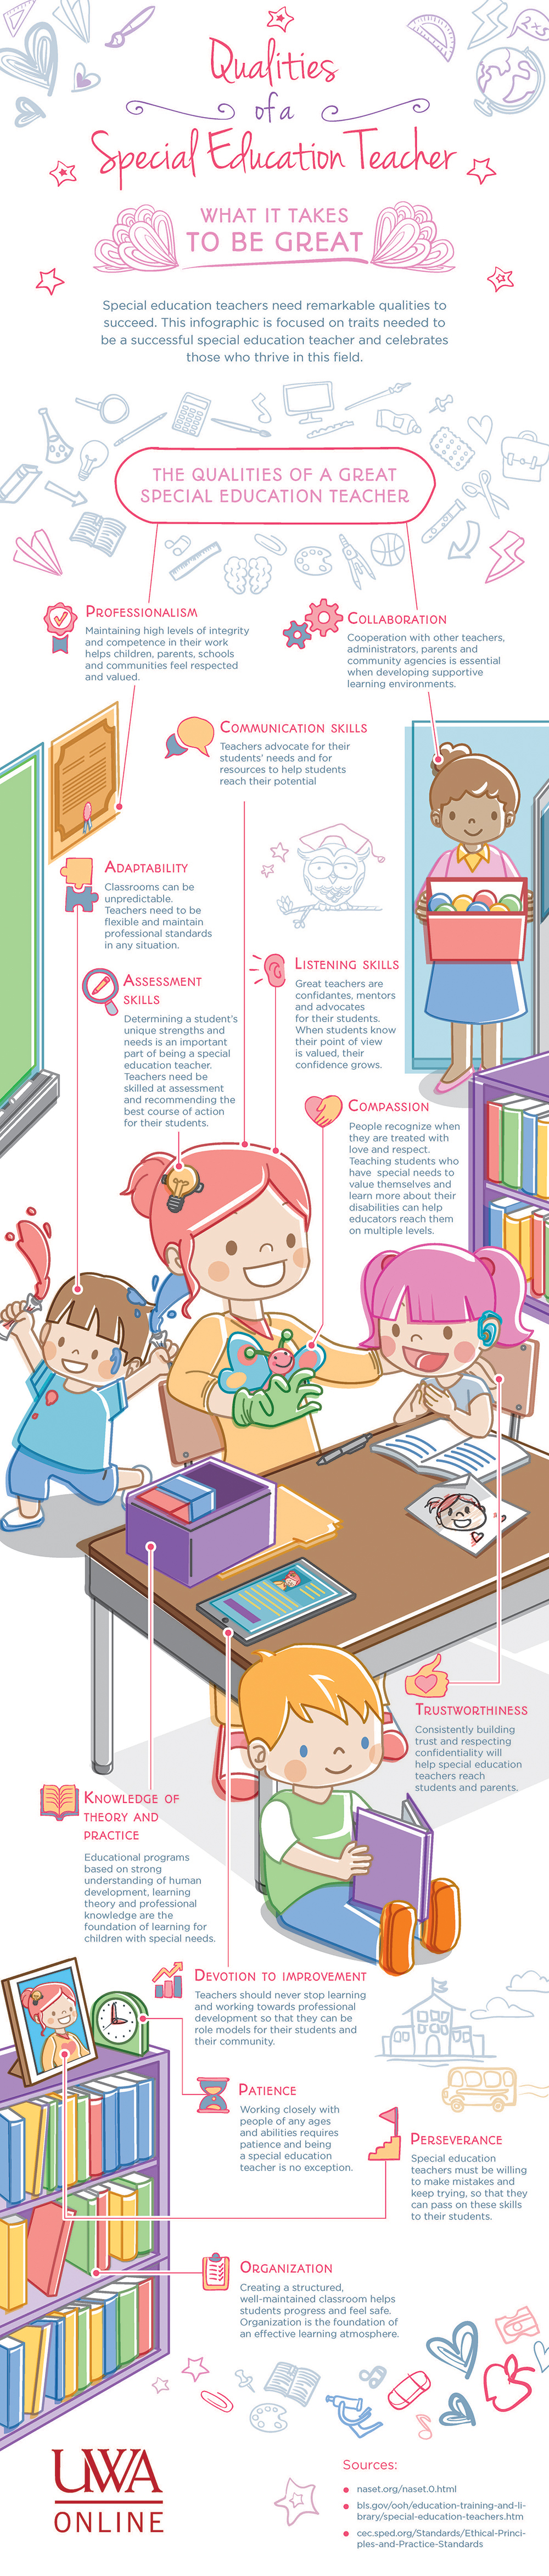 Special Ed Teacher -Infographic - UWA Online